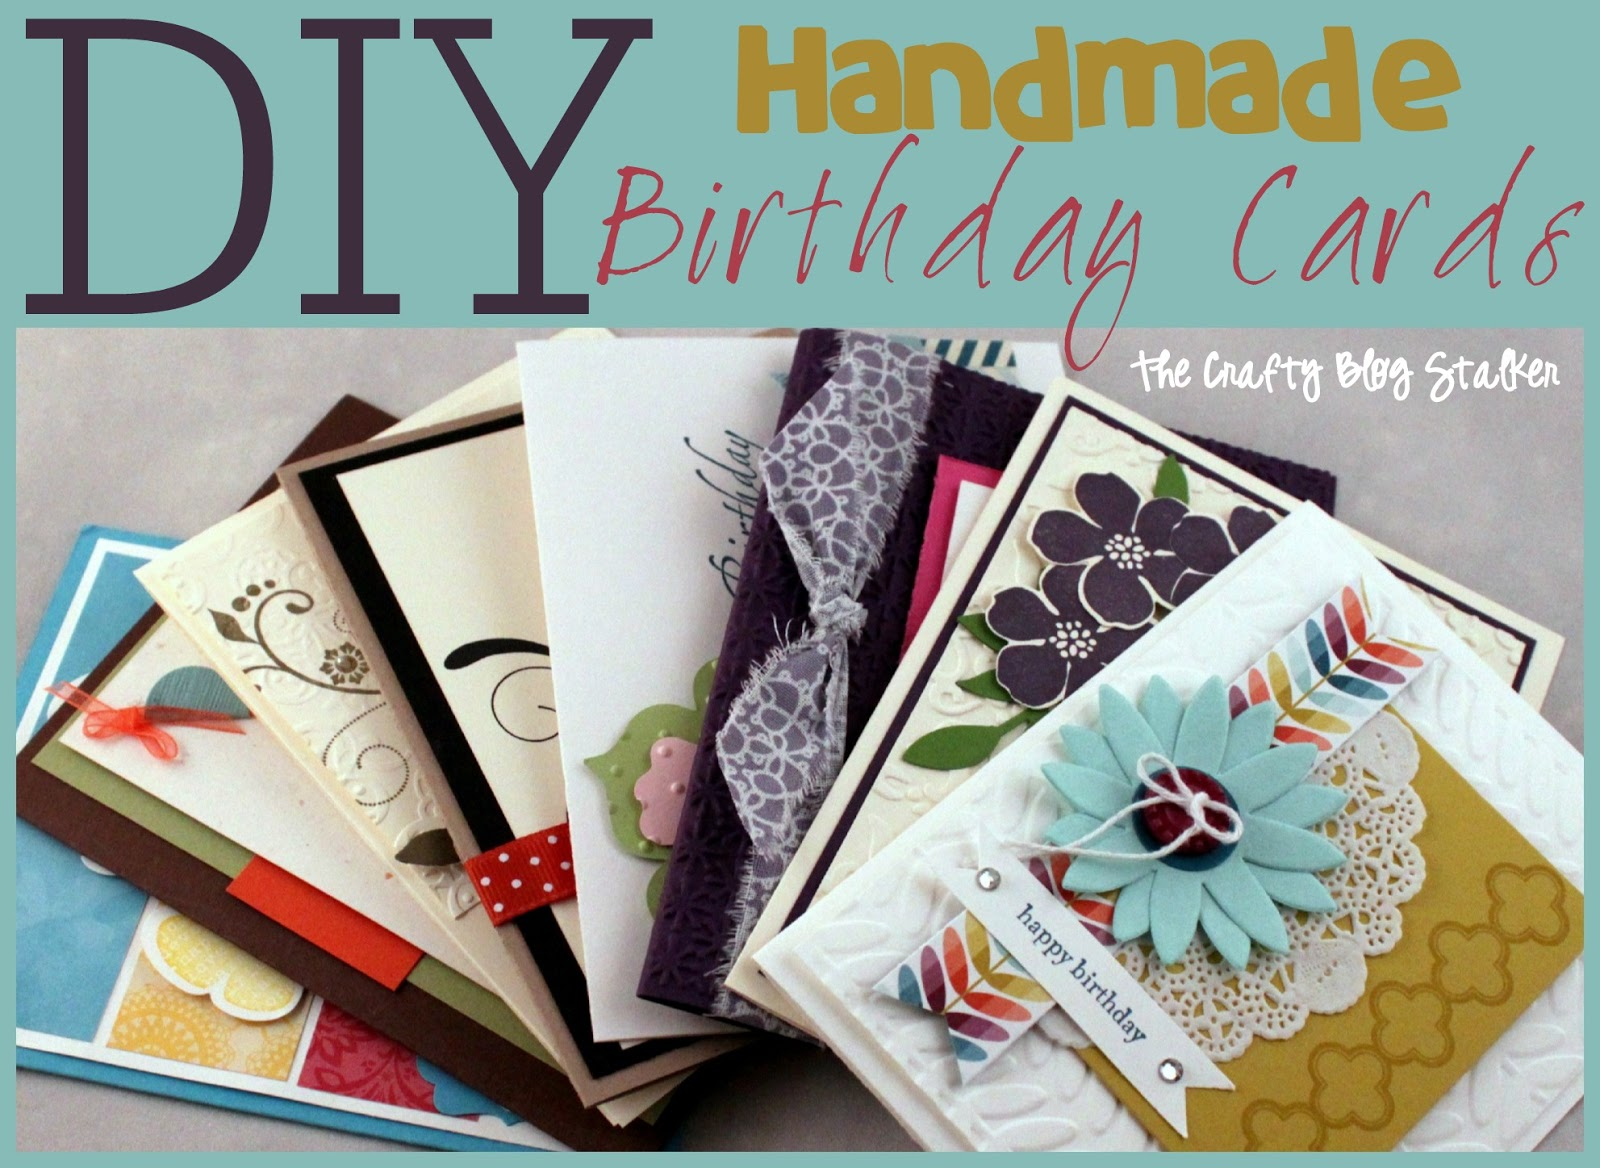 Card Making Birthday Card Ideas Handmade Birthday Card Ideas The Crafty Blog Stalker